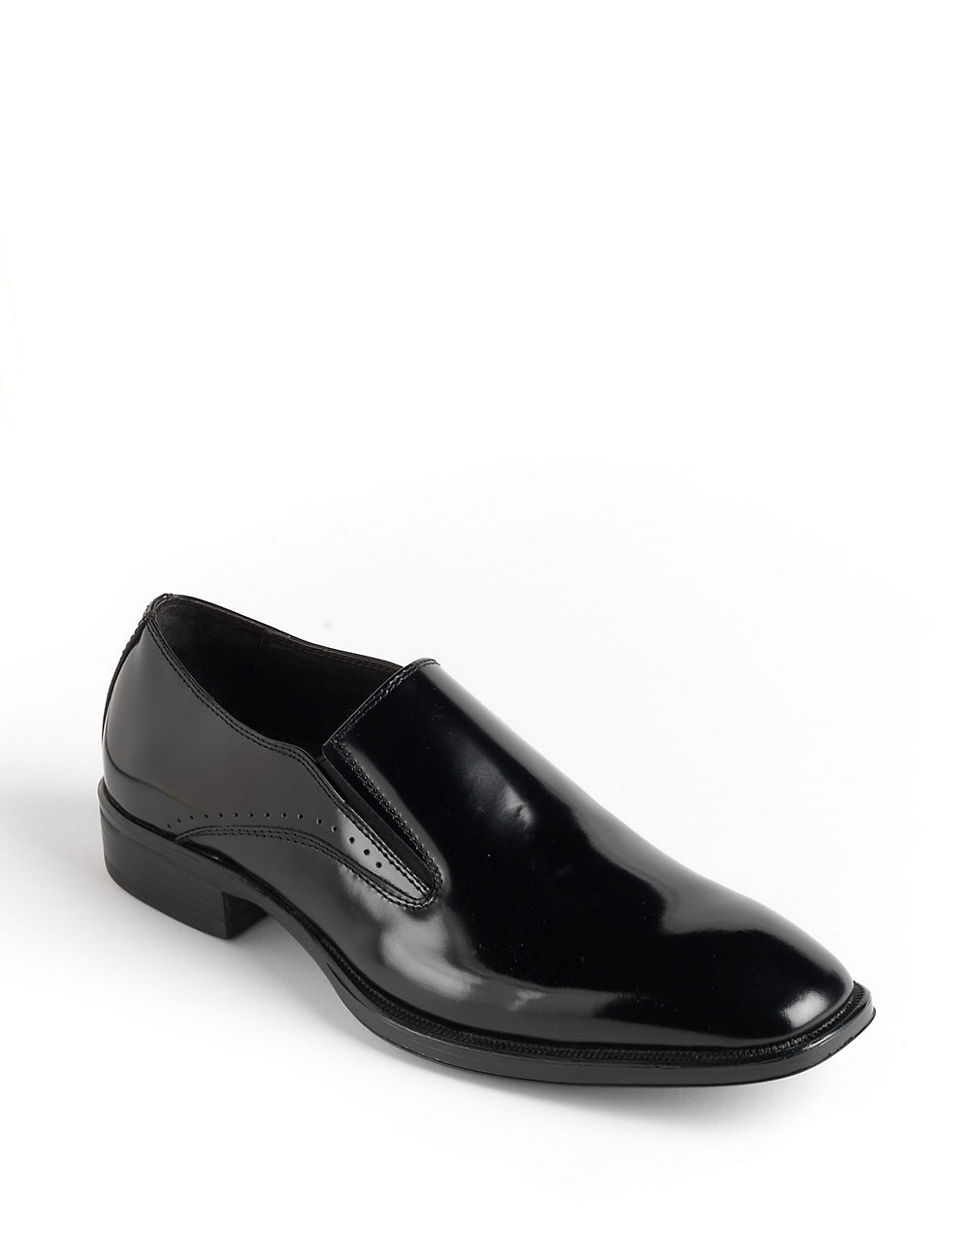 Lyst - Johnston & murphy Birchett Leather Slip-On Dress Shoes in Black ...